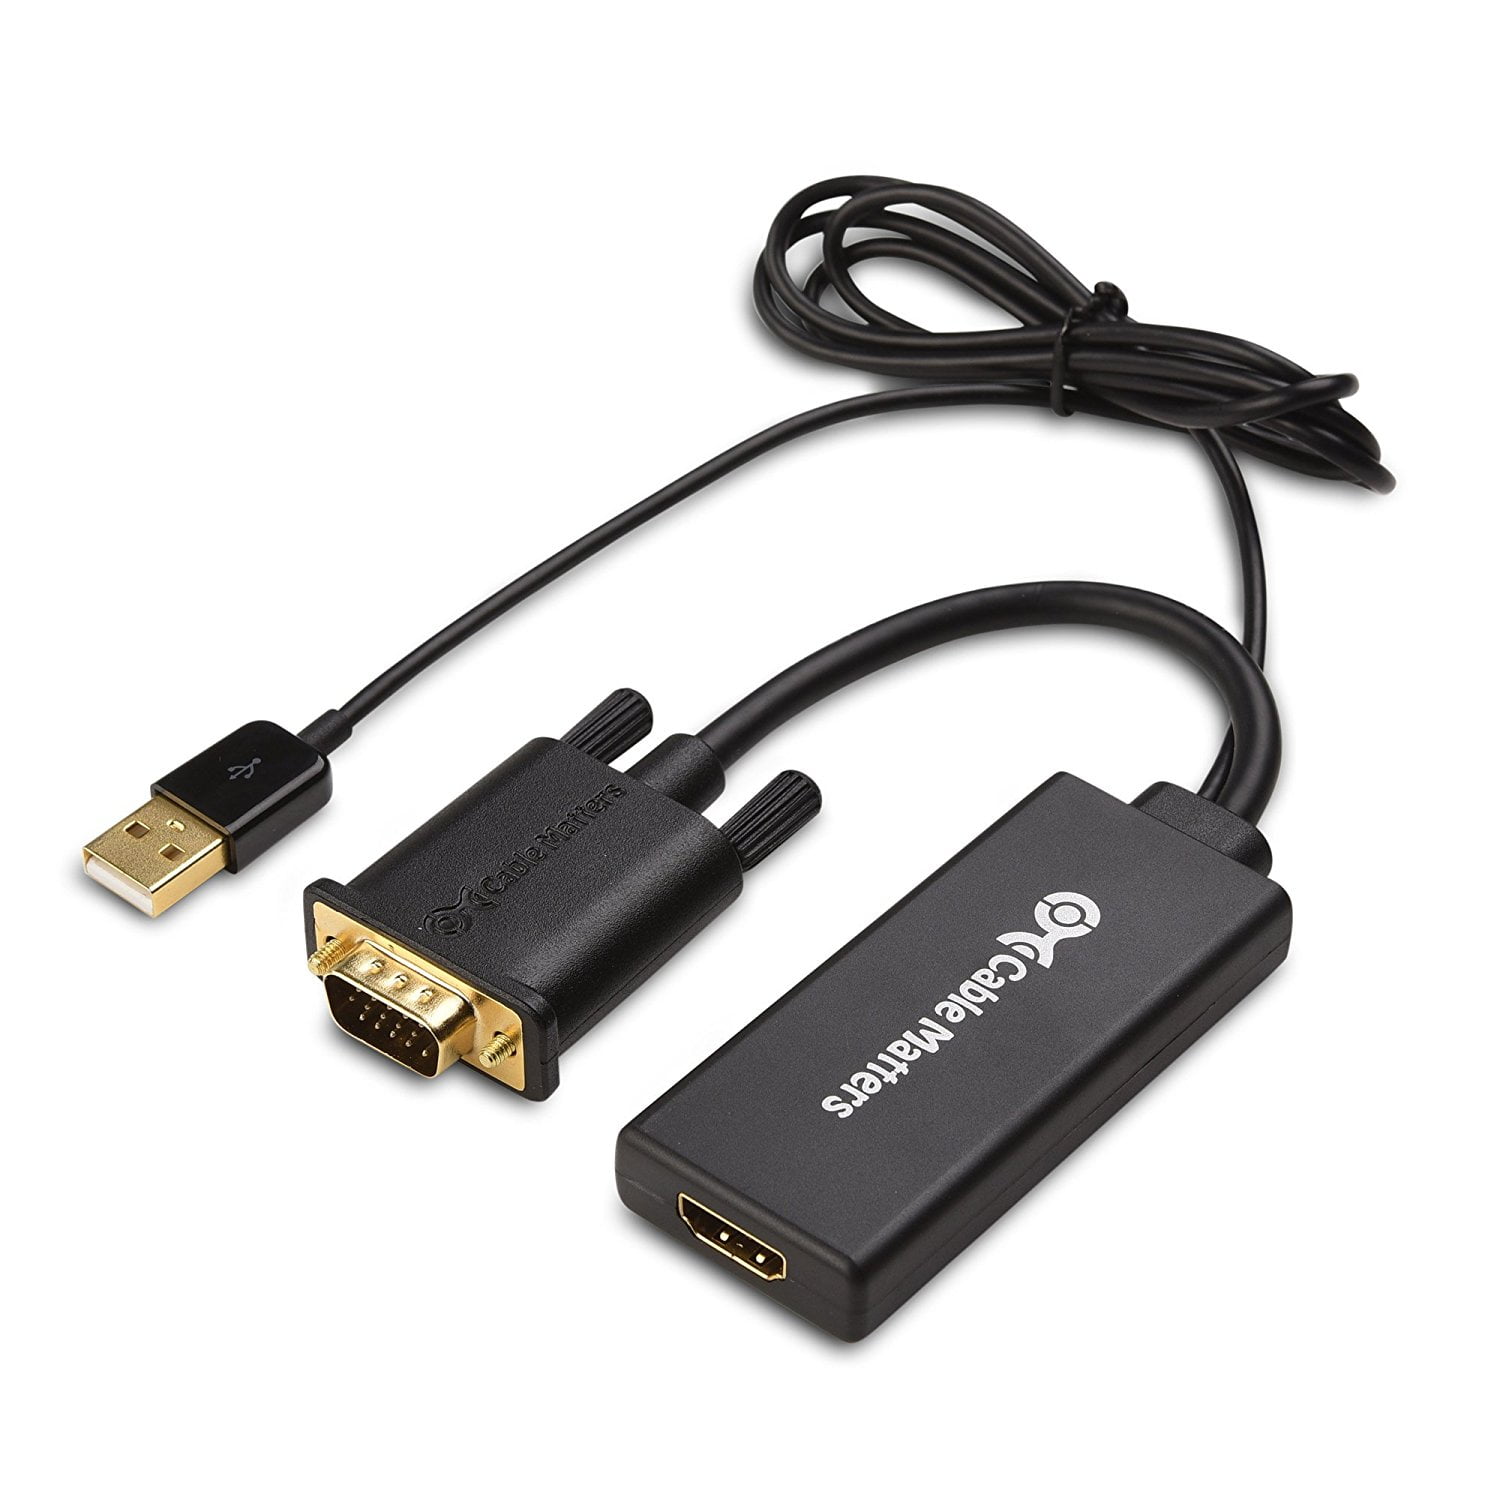 Cable Matters VGA HDMI Converter (VGA HDMI Adapter) with Audio Support - Walmart.com